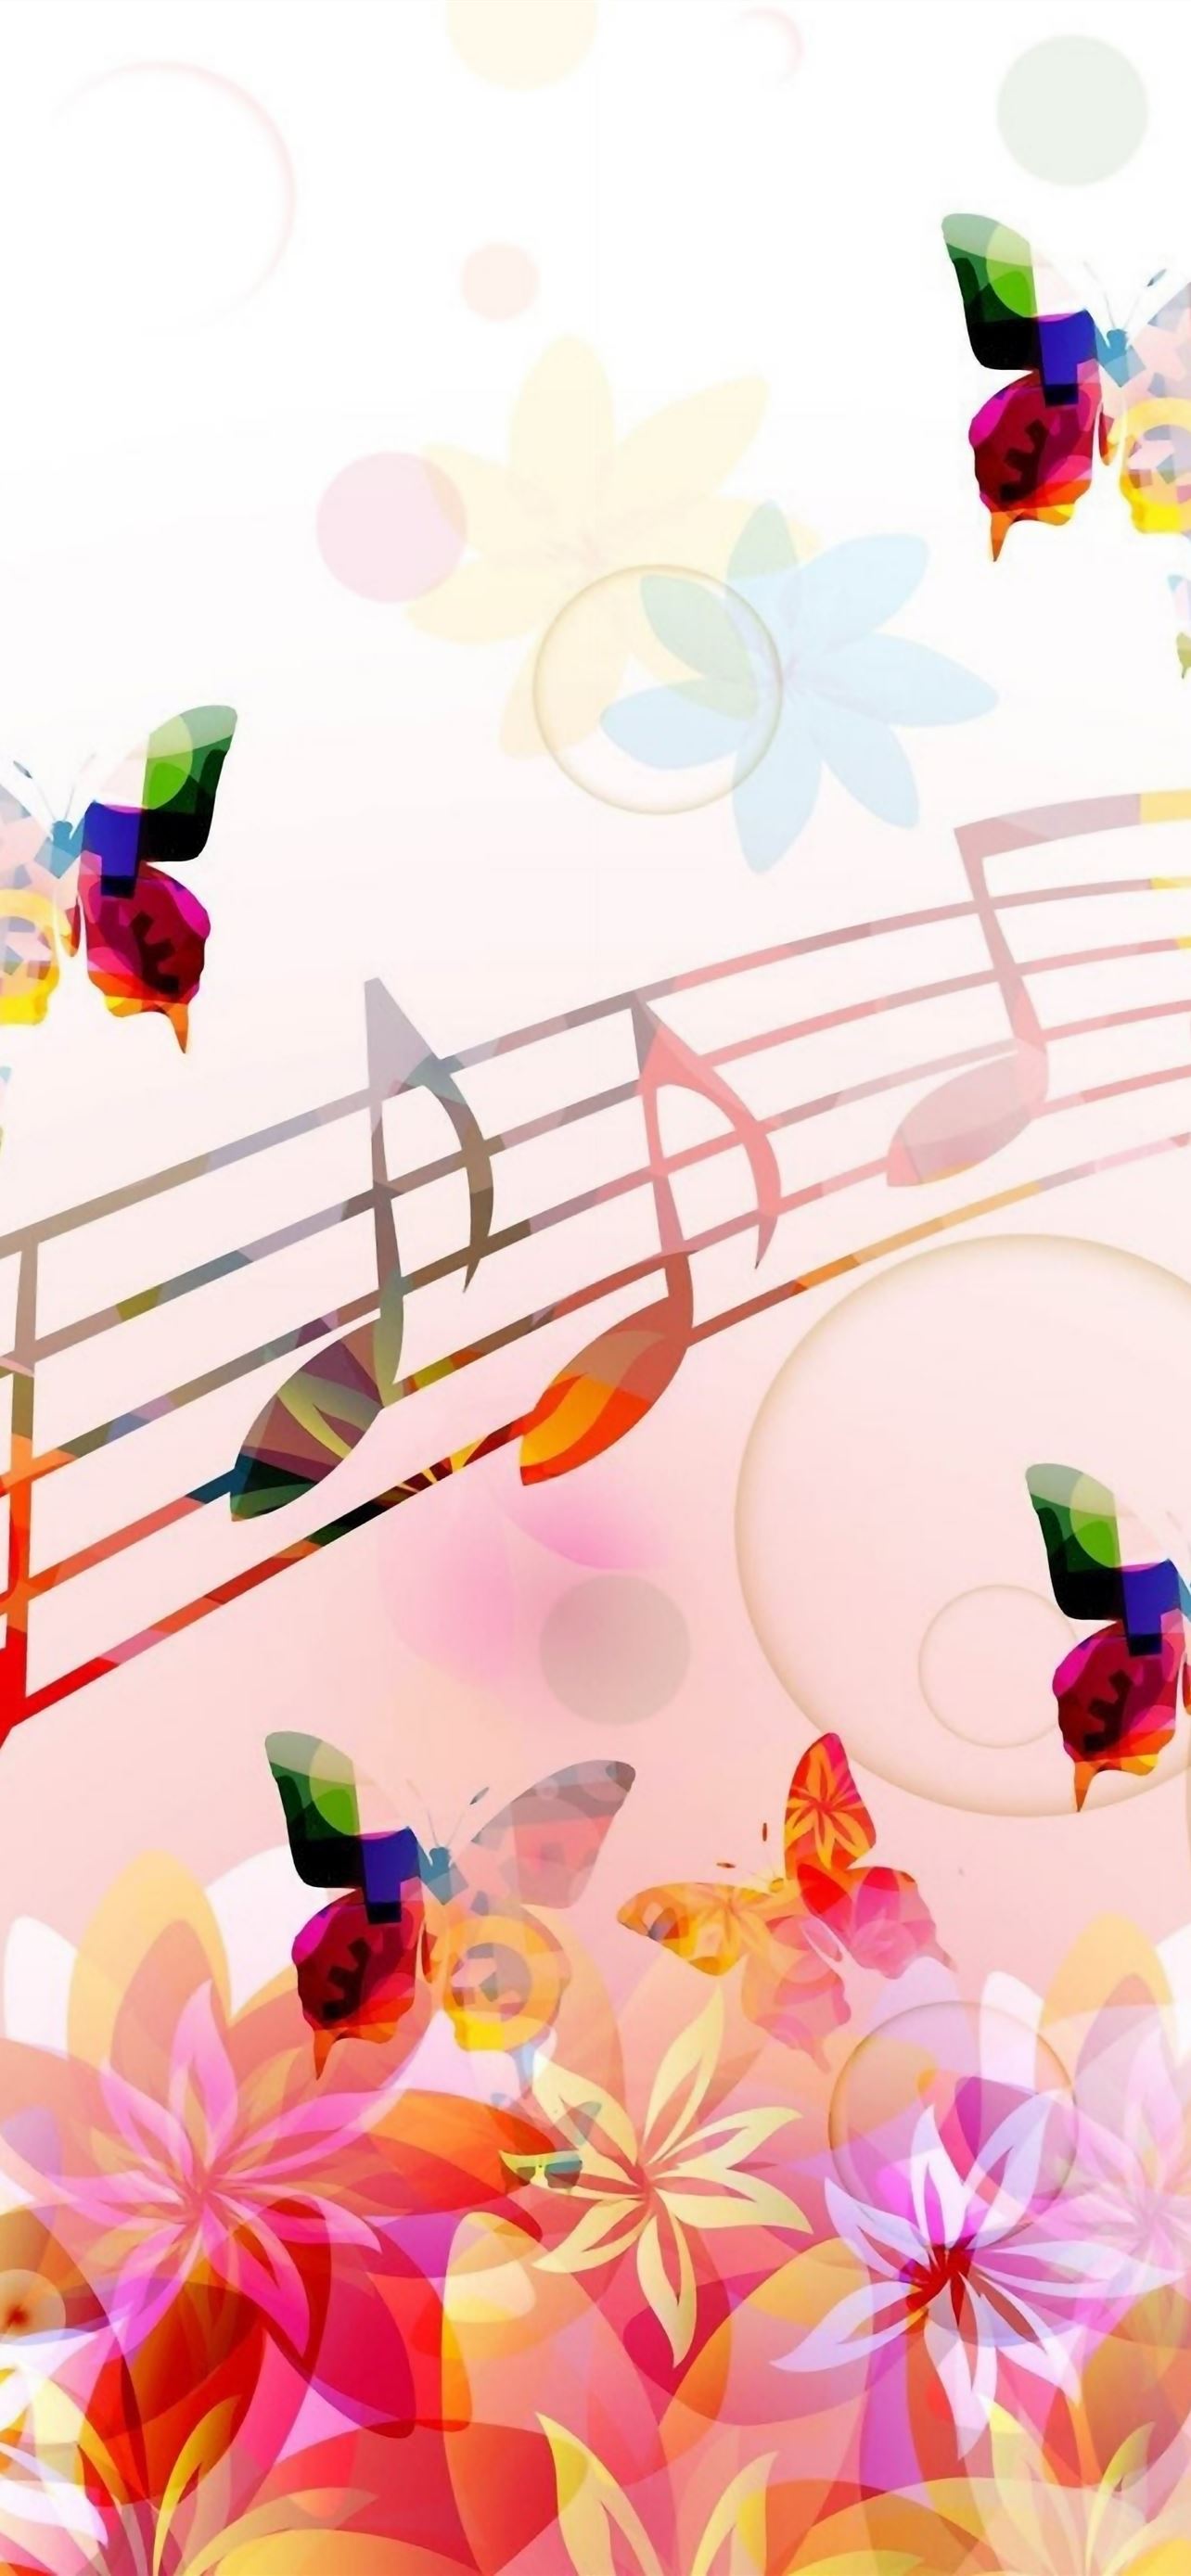 Musical notes flying vector wallpaper Song Stock Vector  Adobe Stock